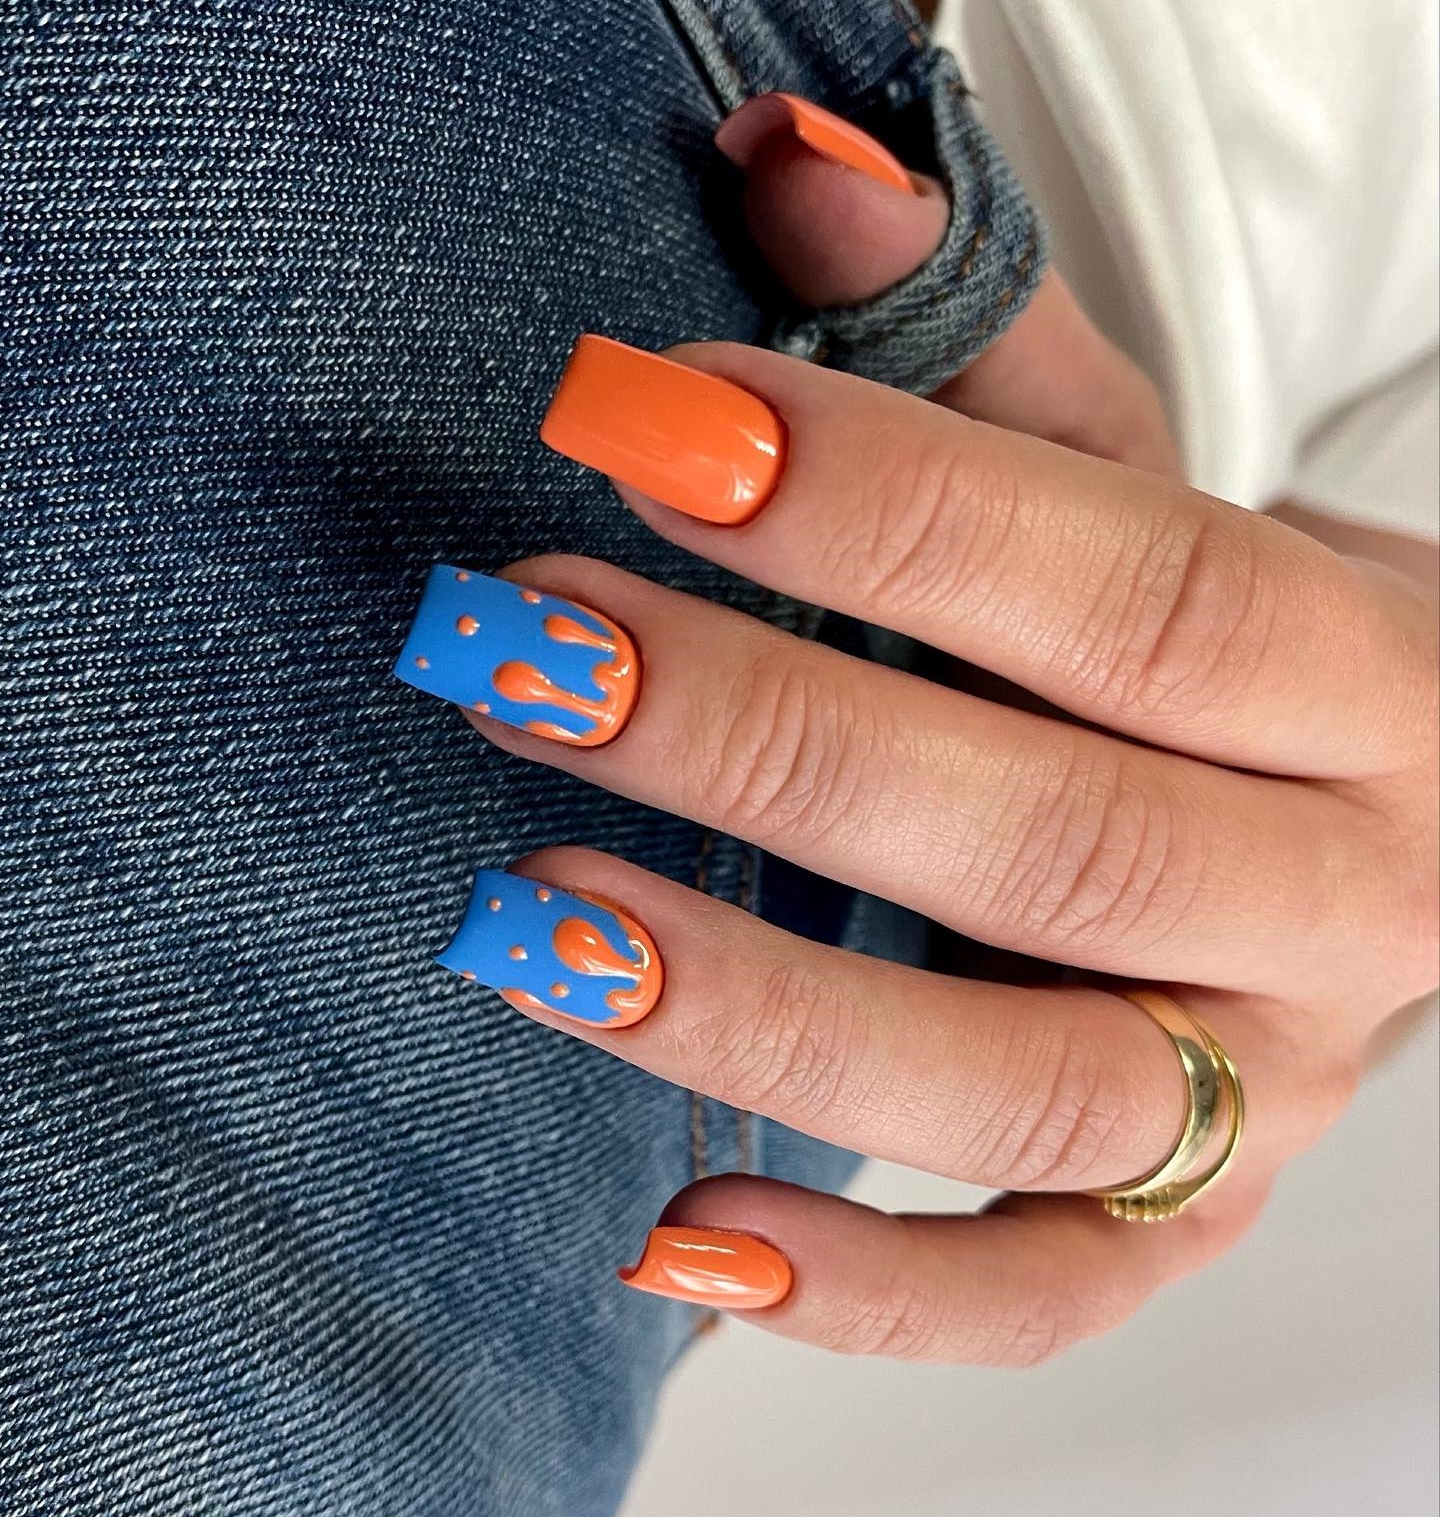 Square Orange and Blue Nails